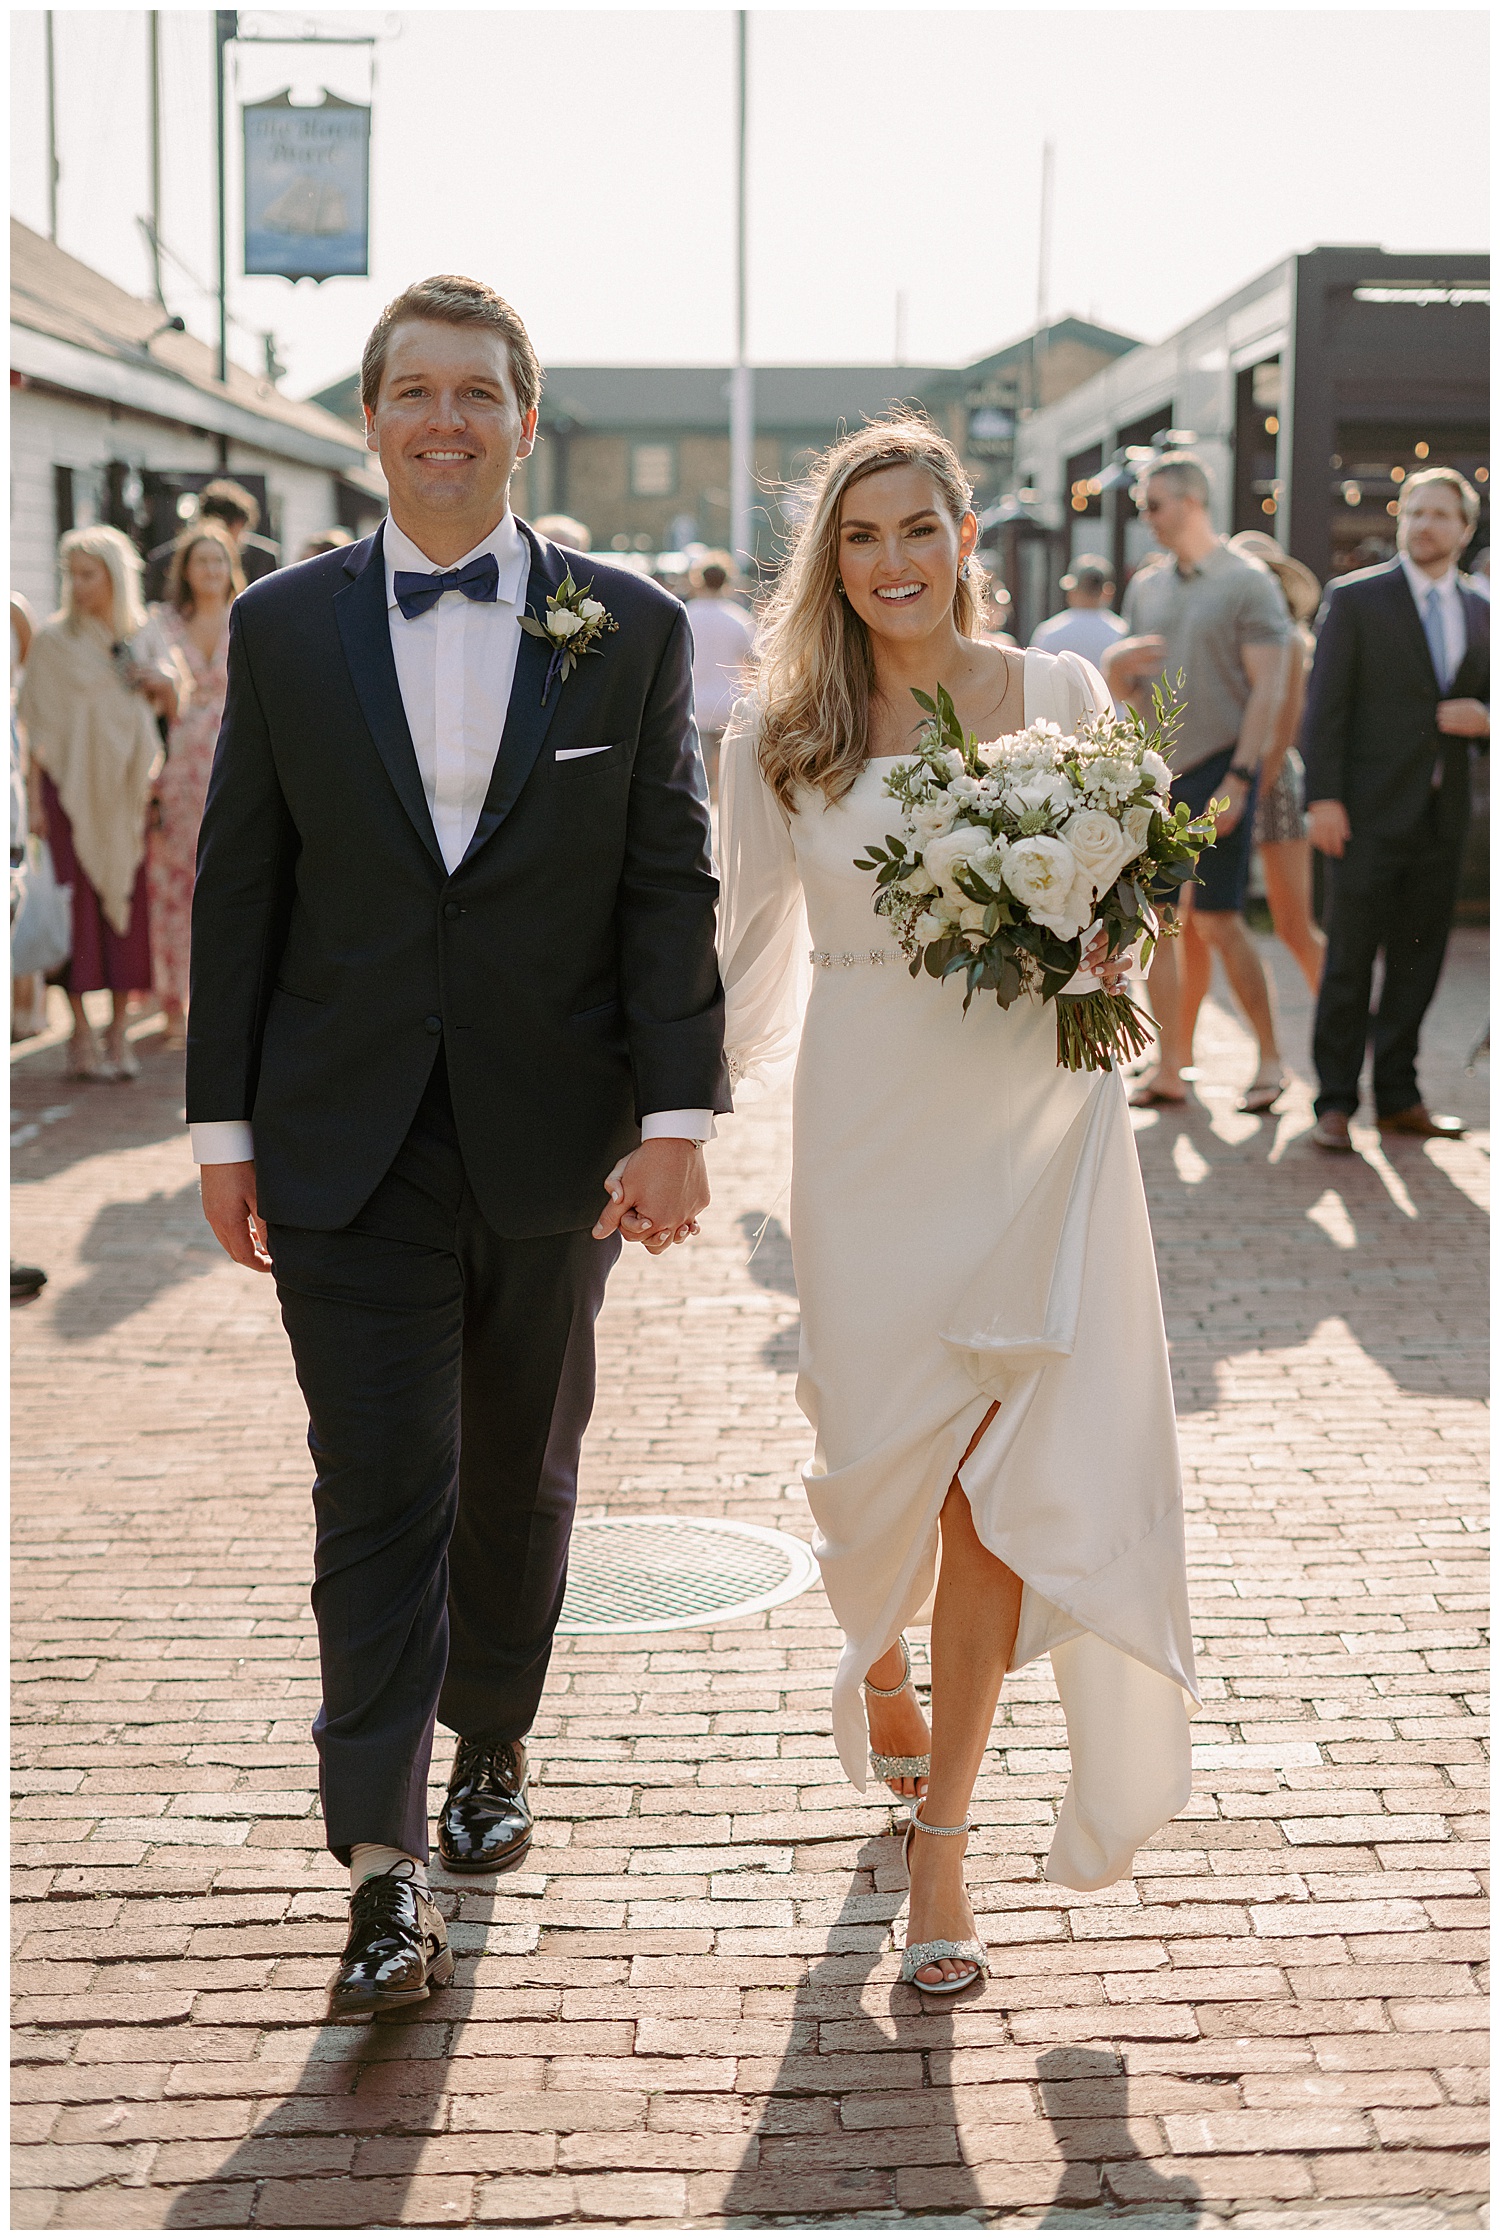 Bride and Groom walking through crowd on Bowens Wharf in Newport Rhode Island